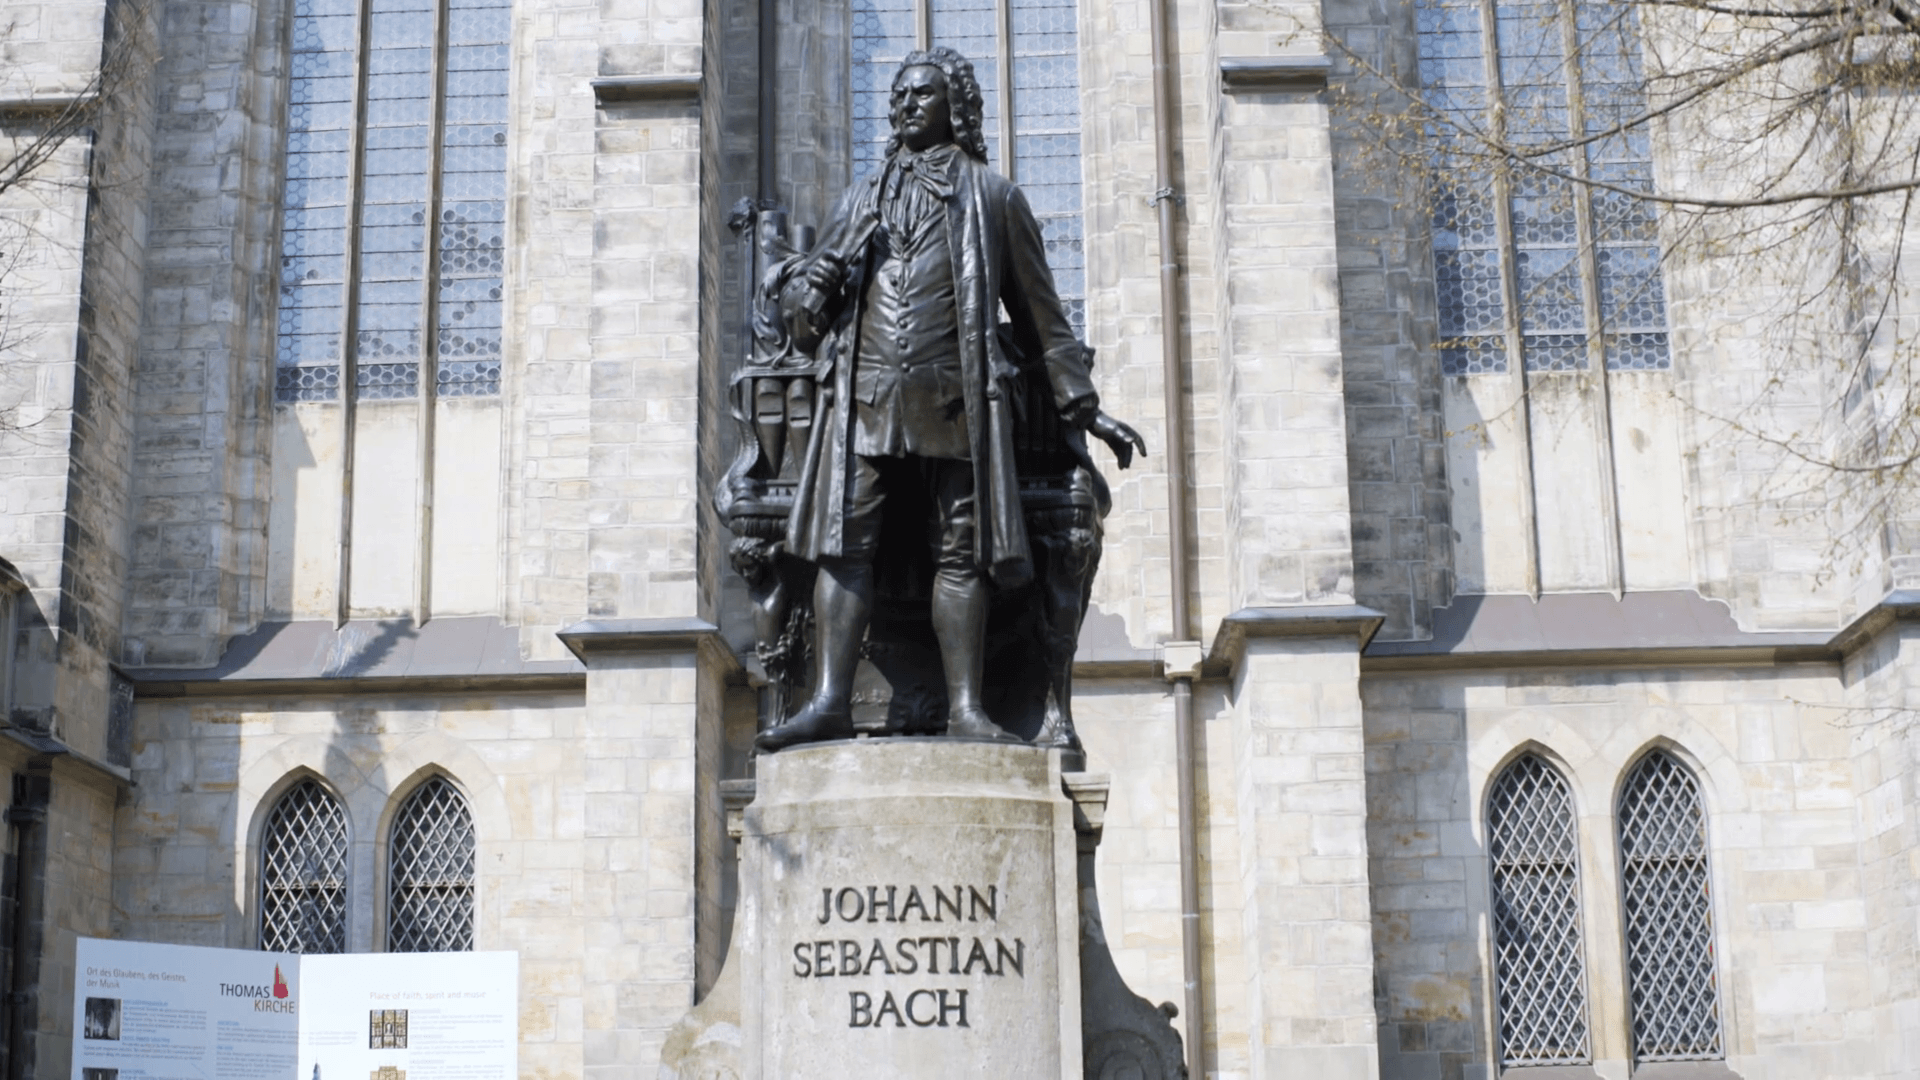 Johann Sebastian Bach statue, St. Thomas Church, Leipzig, Germany